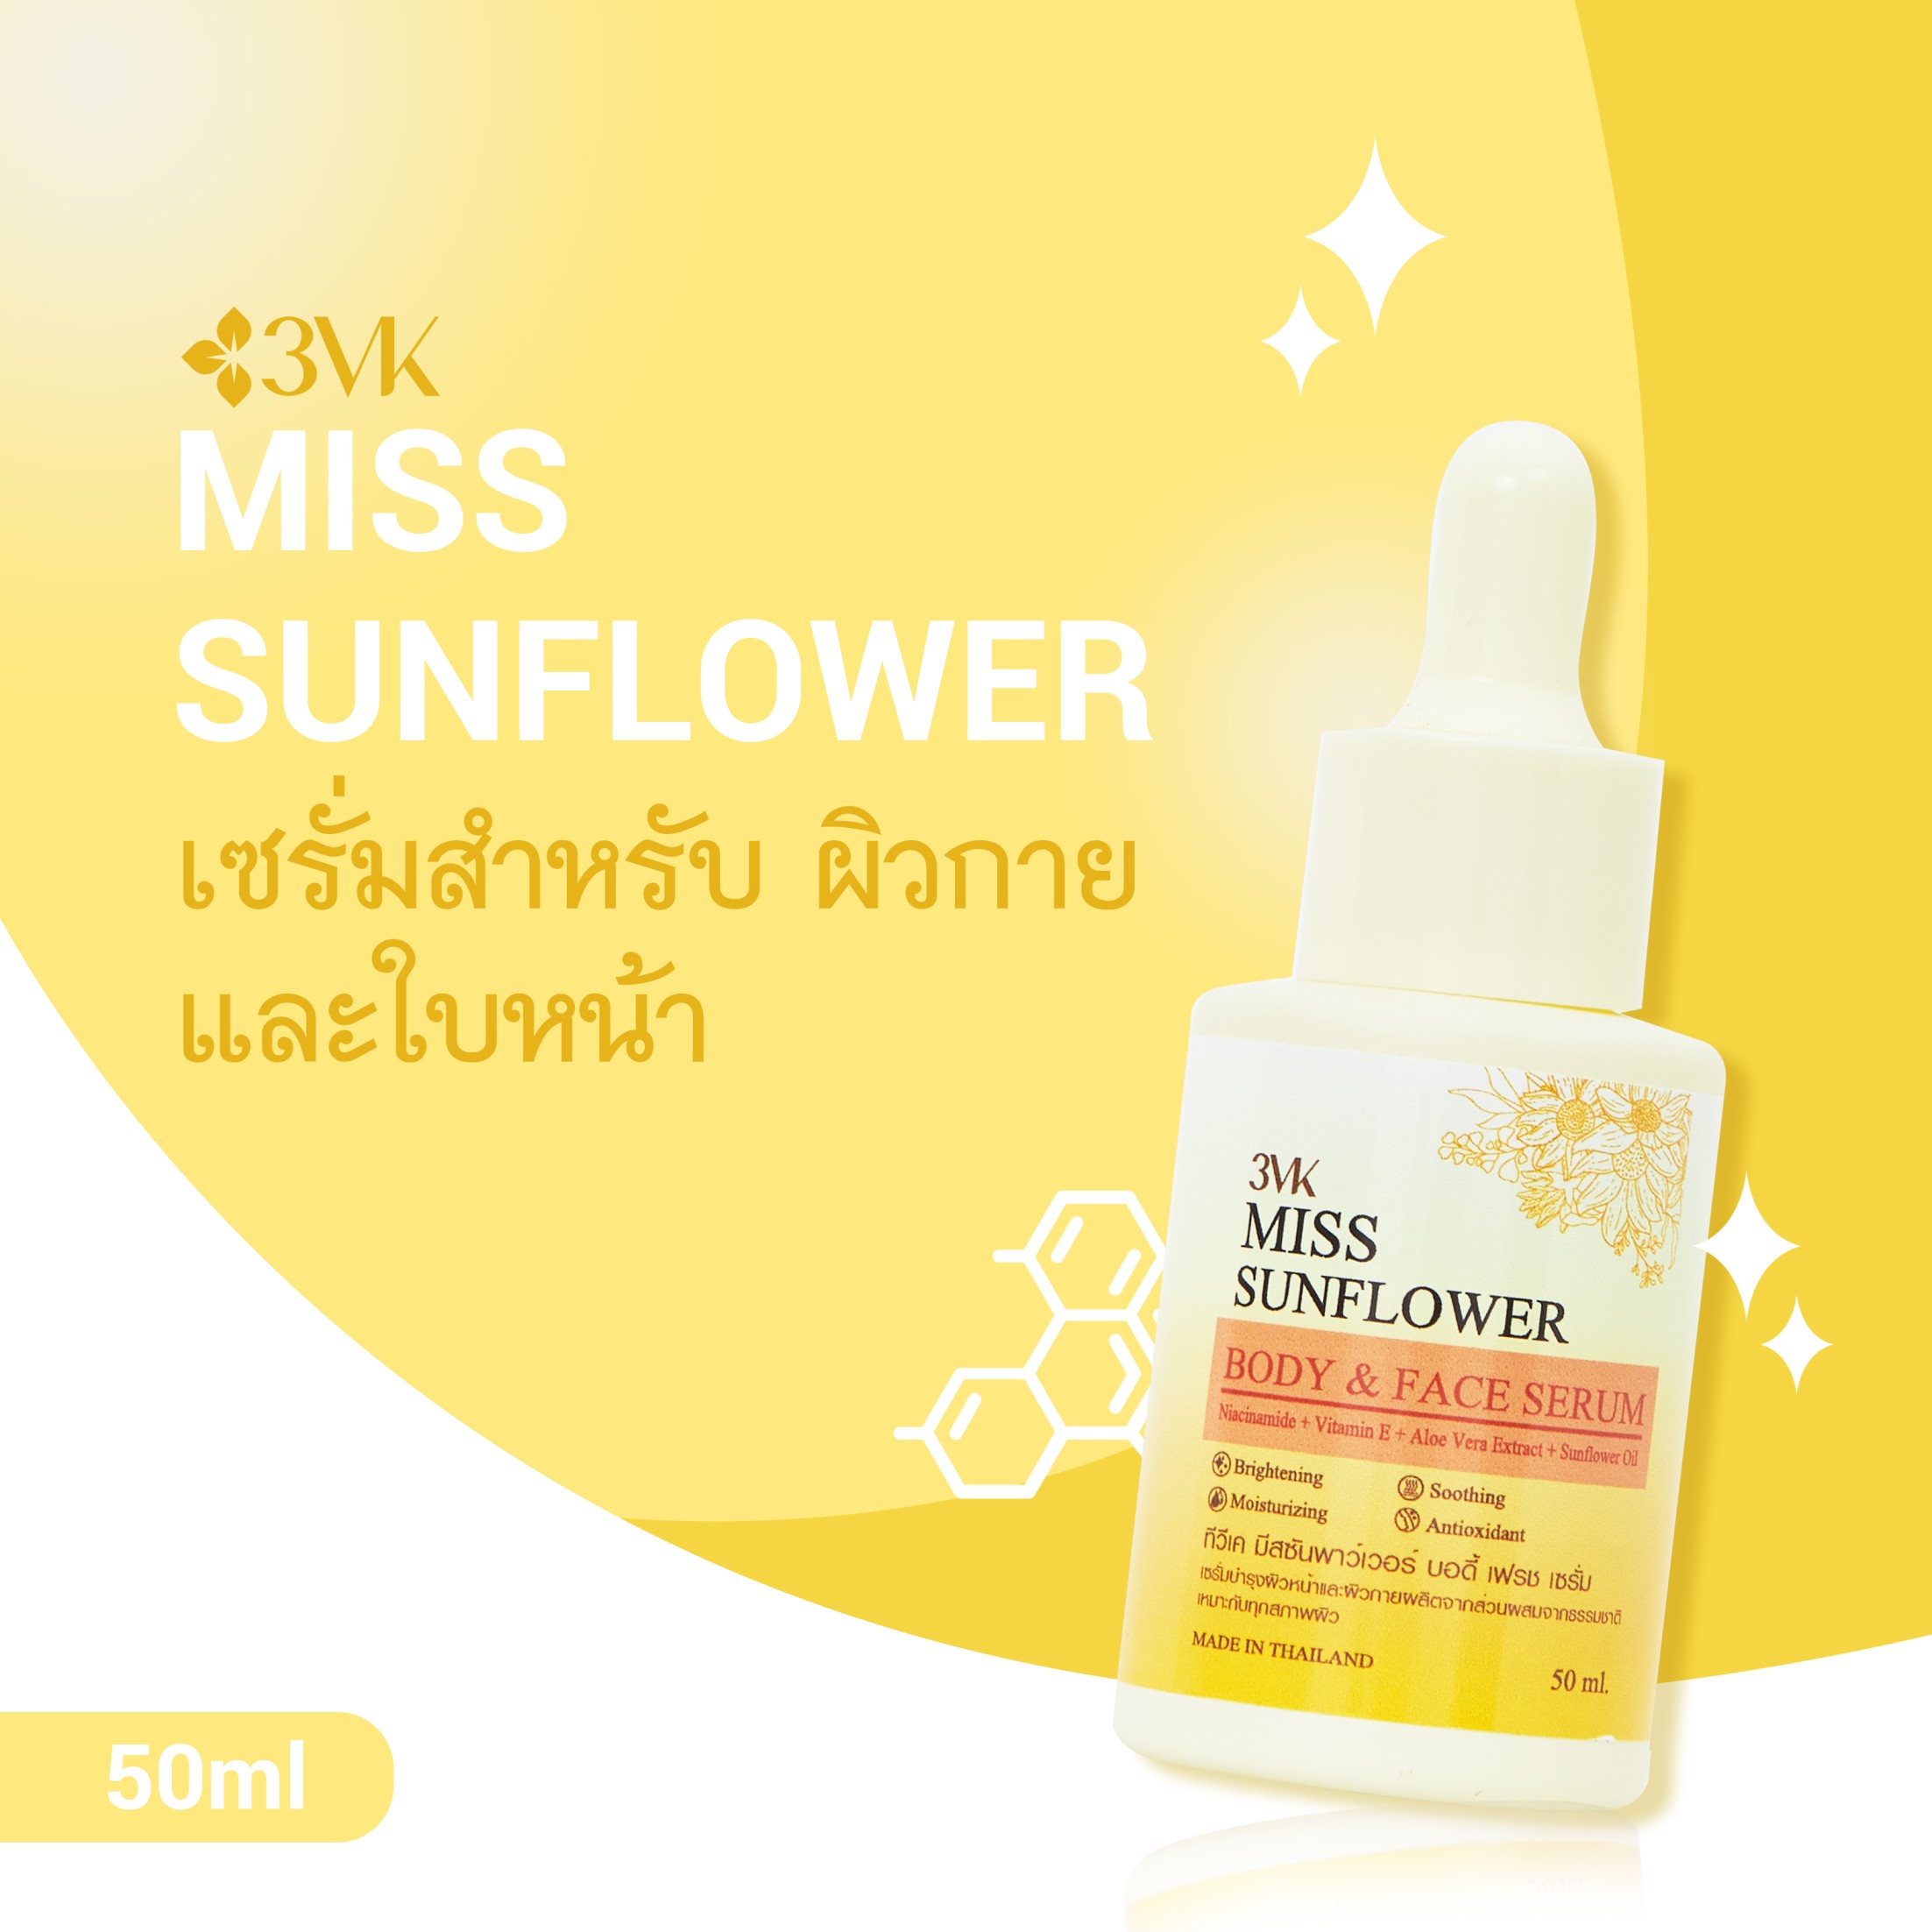 3VK Miss Sunflower Body & Face Serum 50ml